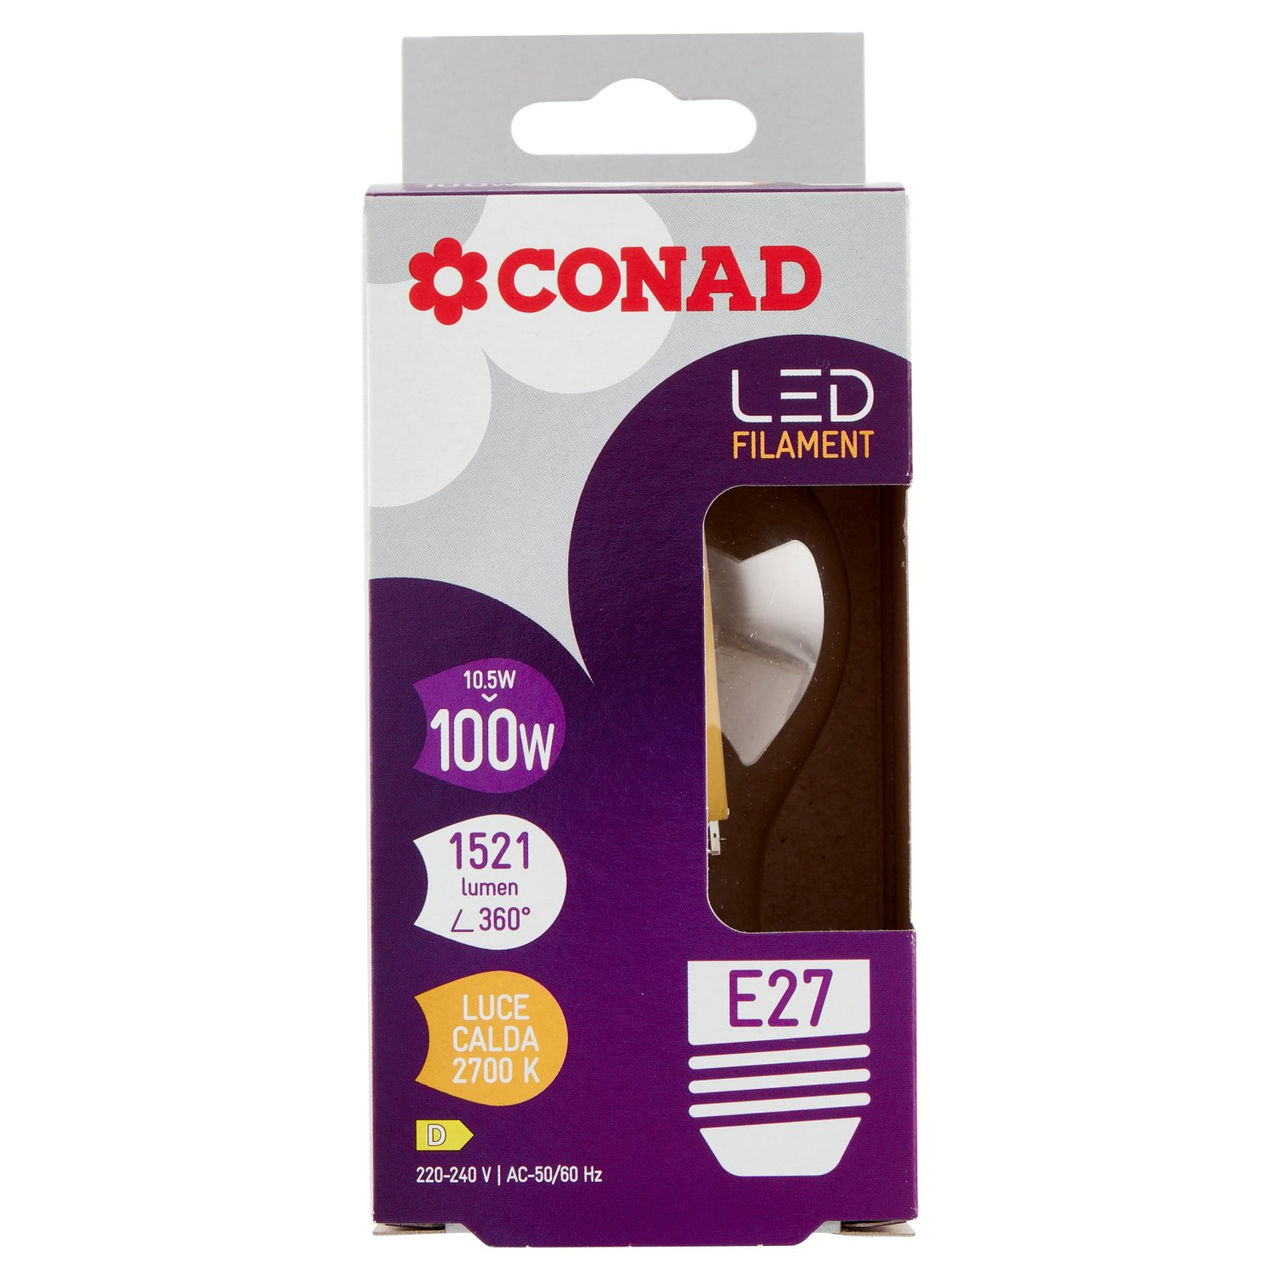 CONAD Led Filament 10.5W 1521 Lumen E27 Luce Calda